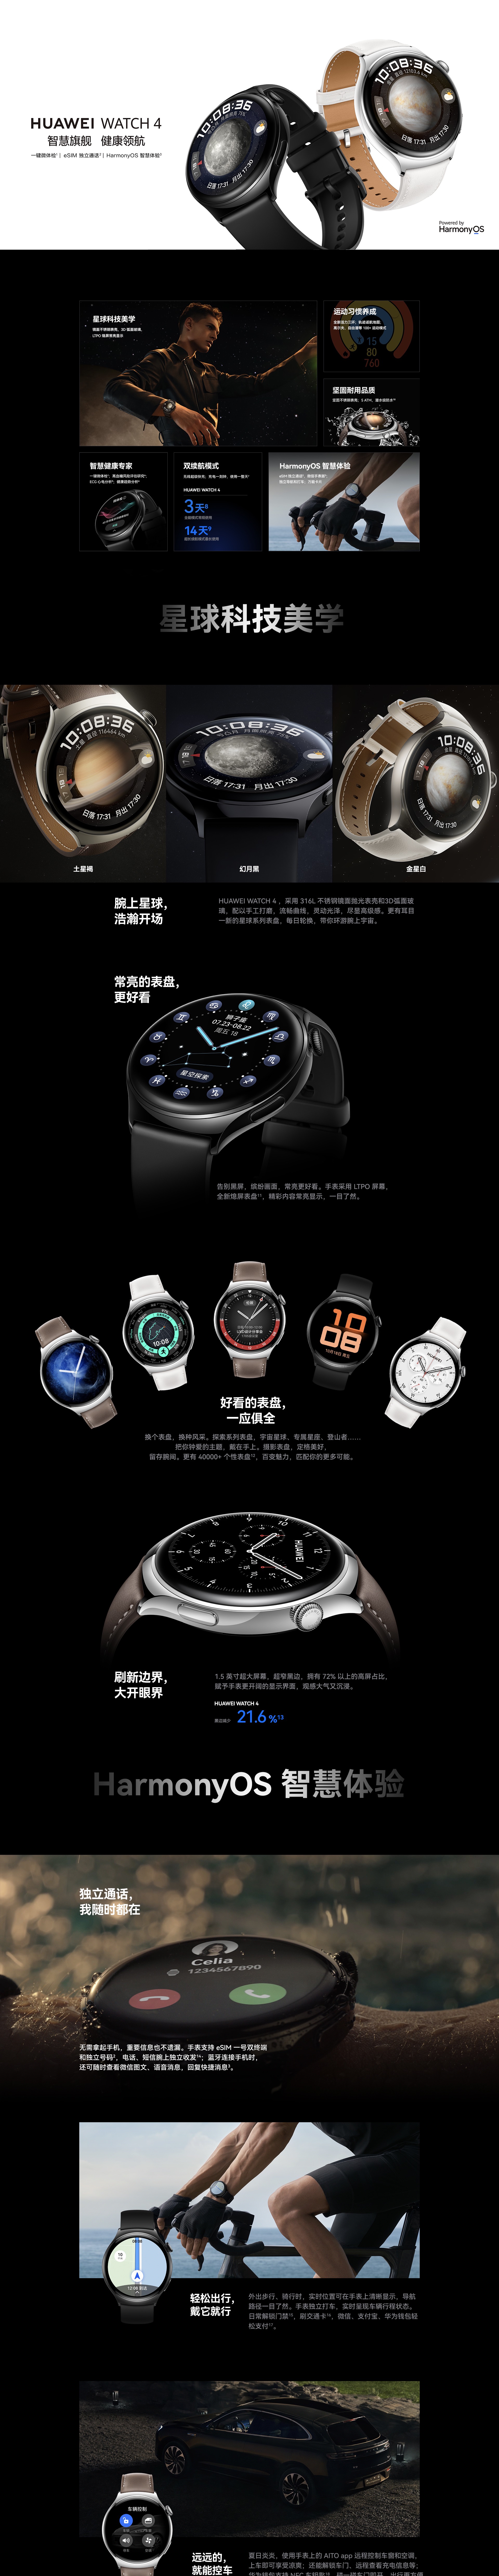 Huawei Watch 4 HarmonyOS Smartwatch